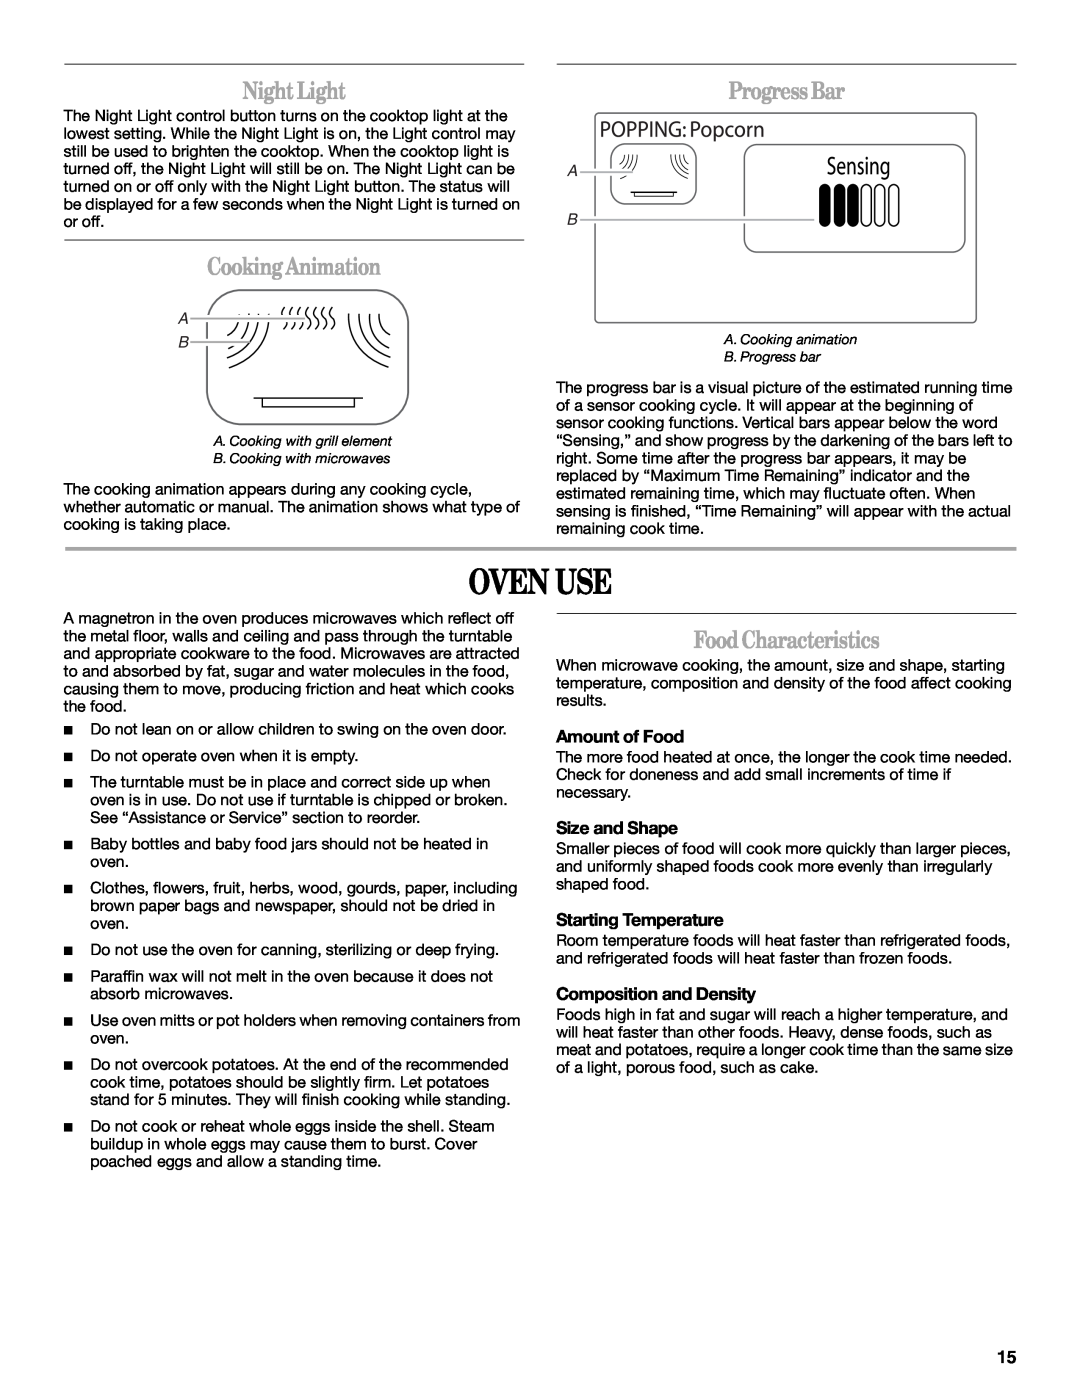 Whirlpool GH6208XR manual Oven Use, Night Light, Cooking Animation, Progress Bar, Food Characteristics, Amount of Food 